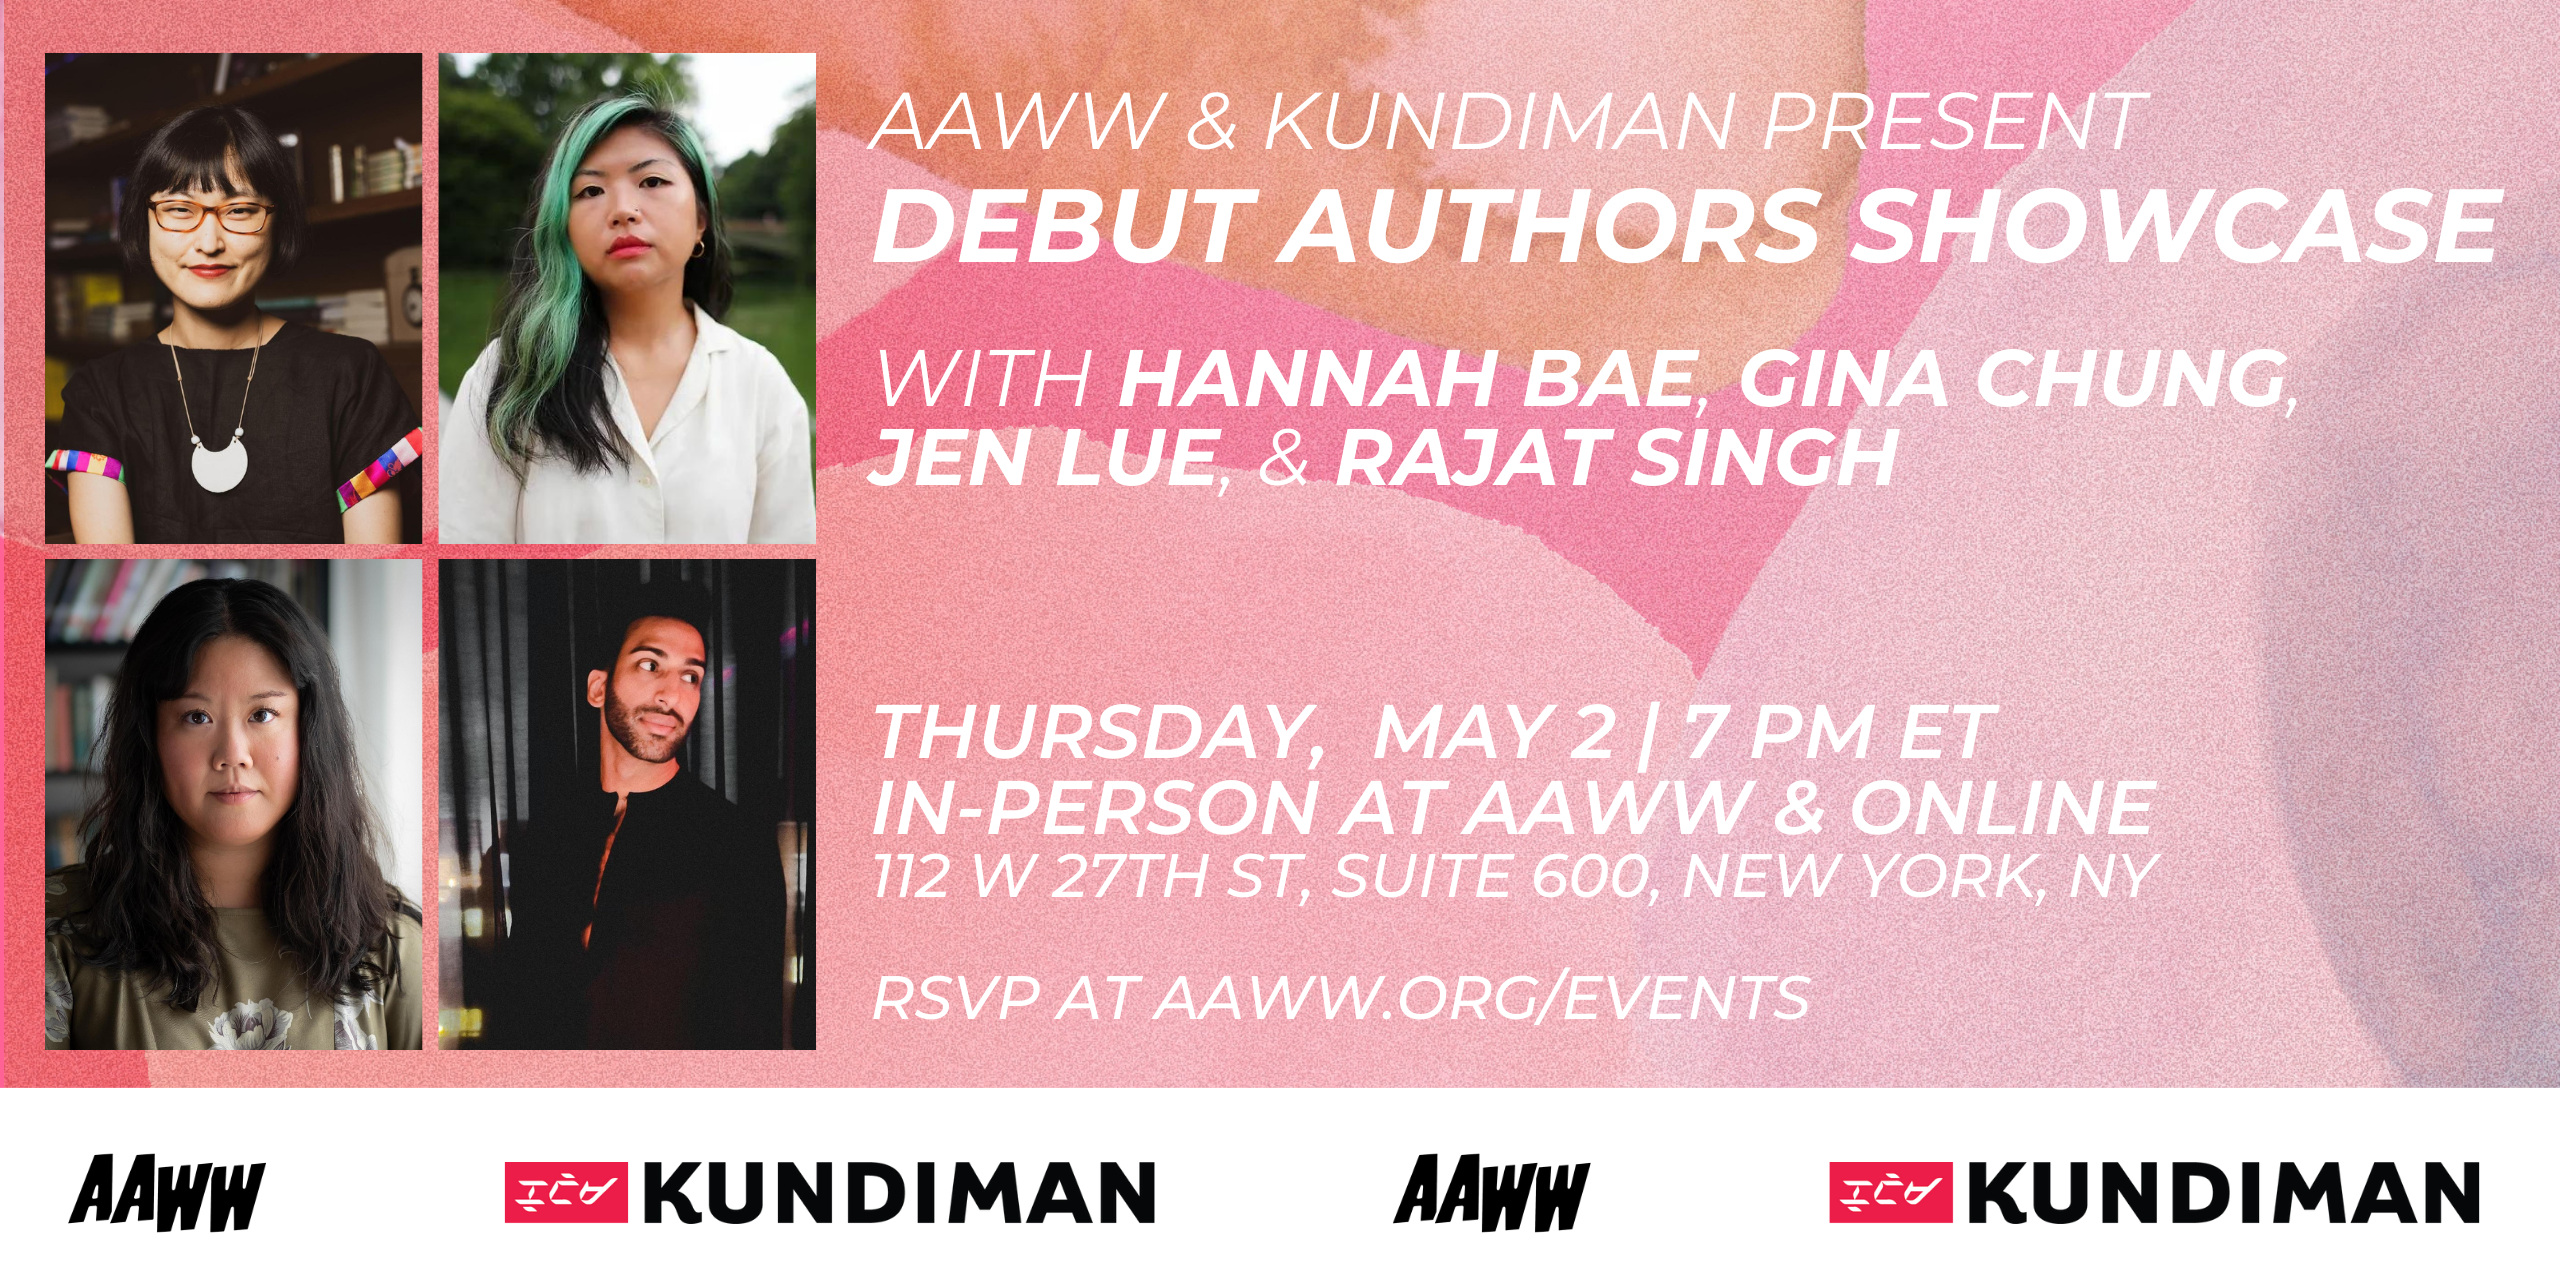 AAWW & Kundiman Present: Emerging Writers in Conversation